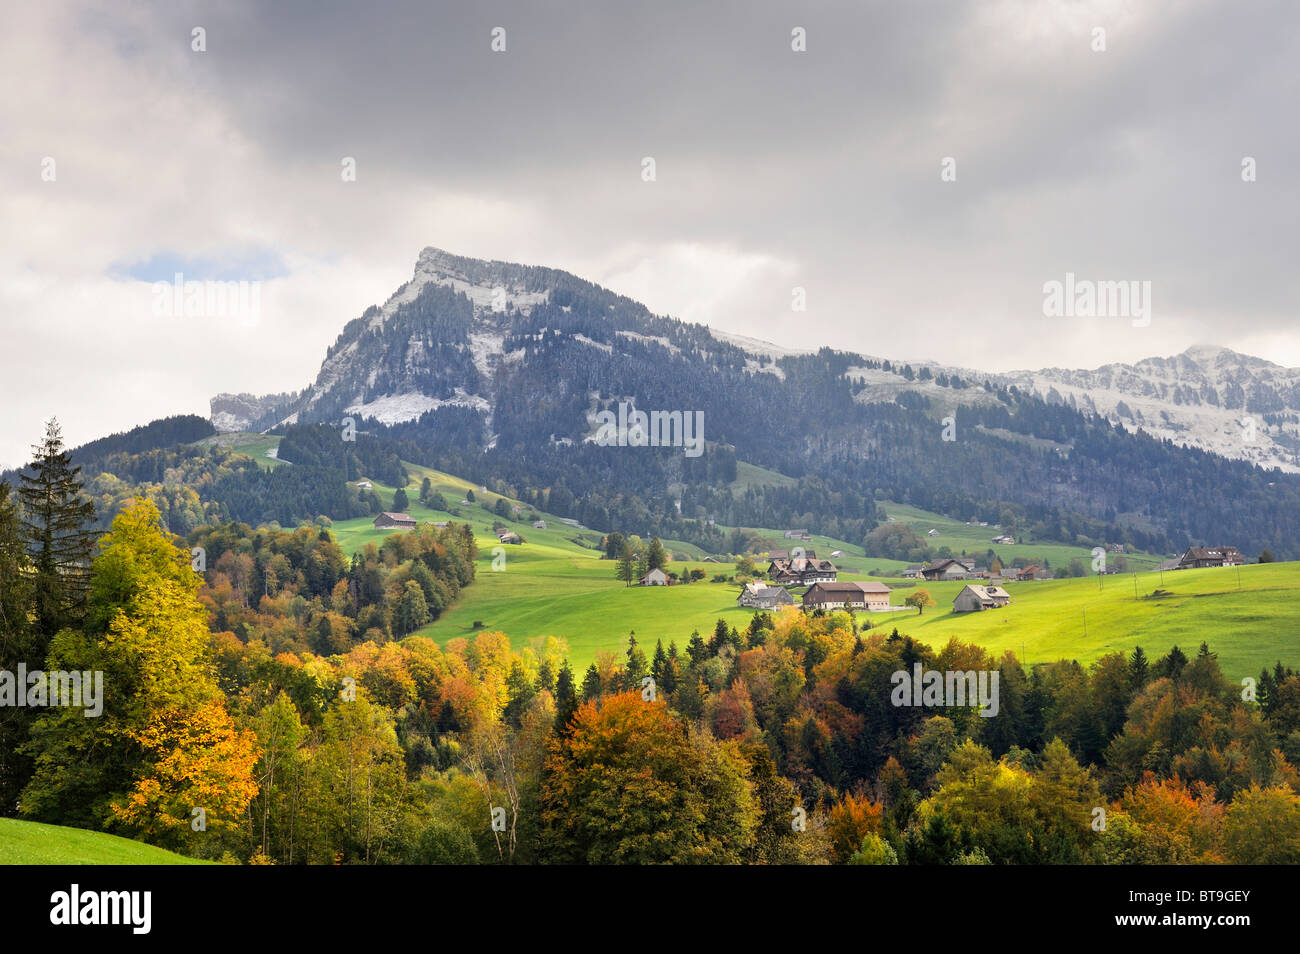 Mt. Stockberg, 1781m, landmark mountain of Ennetbuehl in the Toggenburg region, Canton St. Gallen, Switzerland, Europe Stock Photo